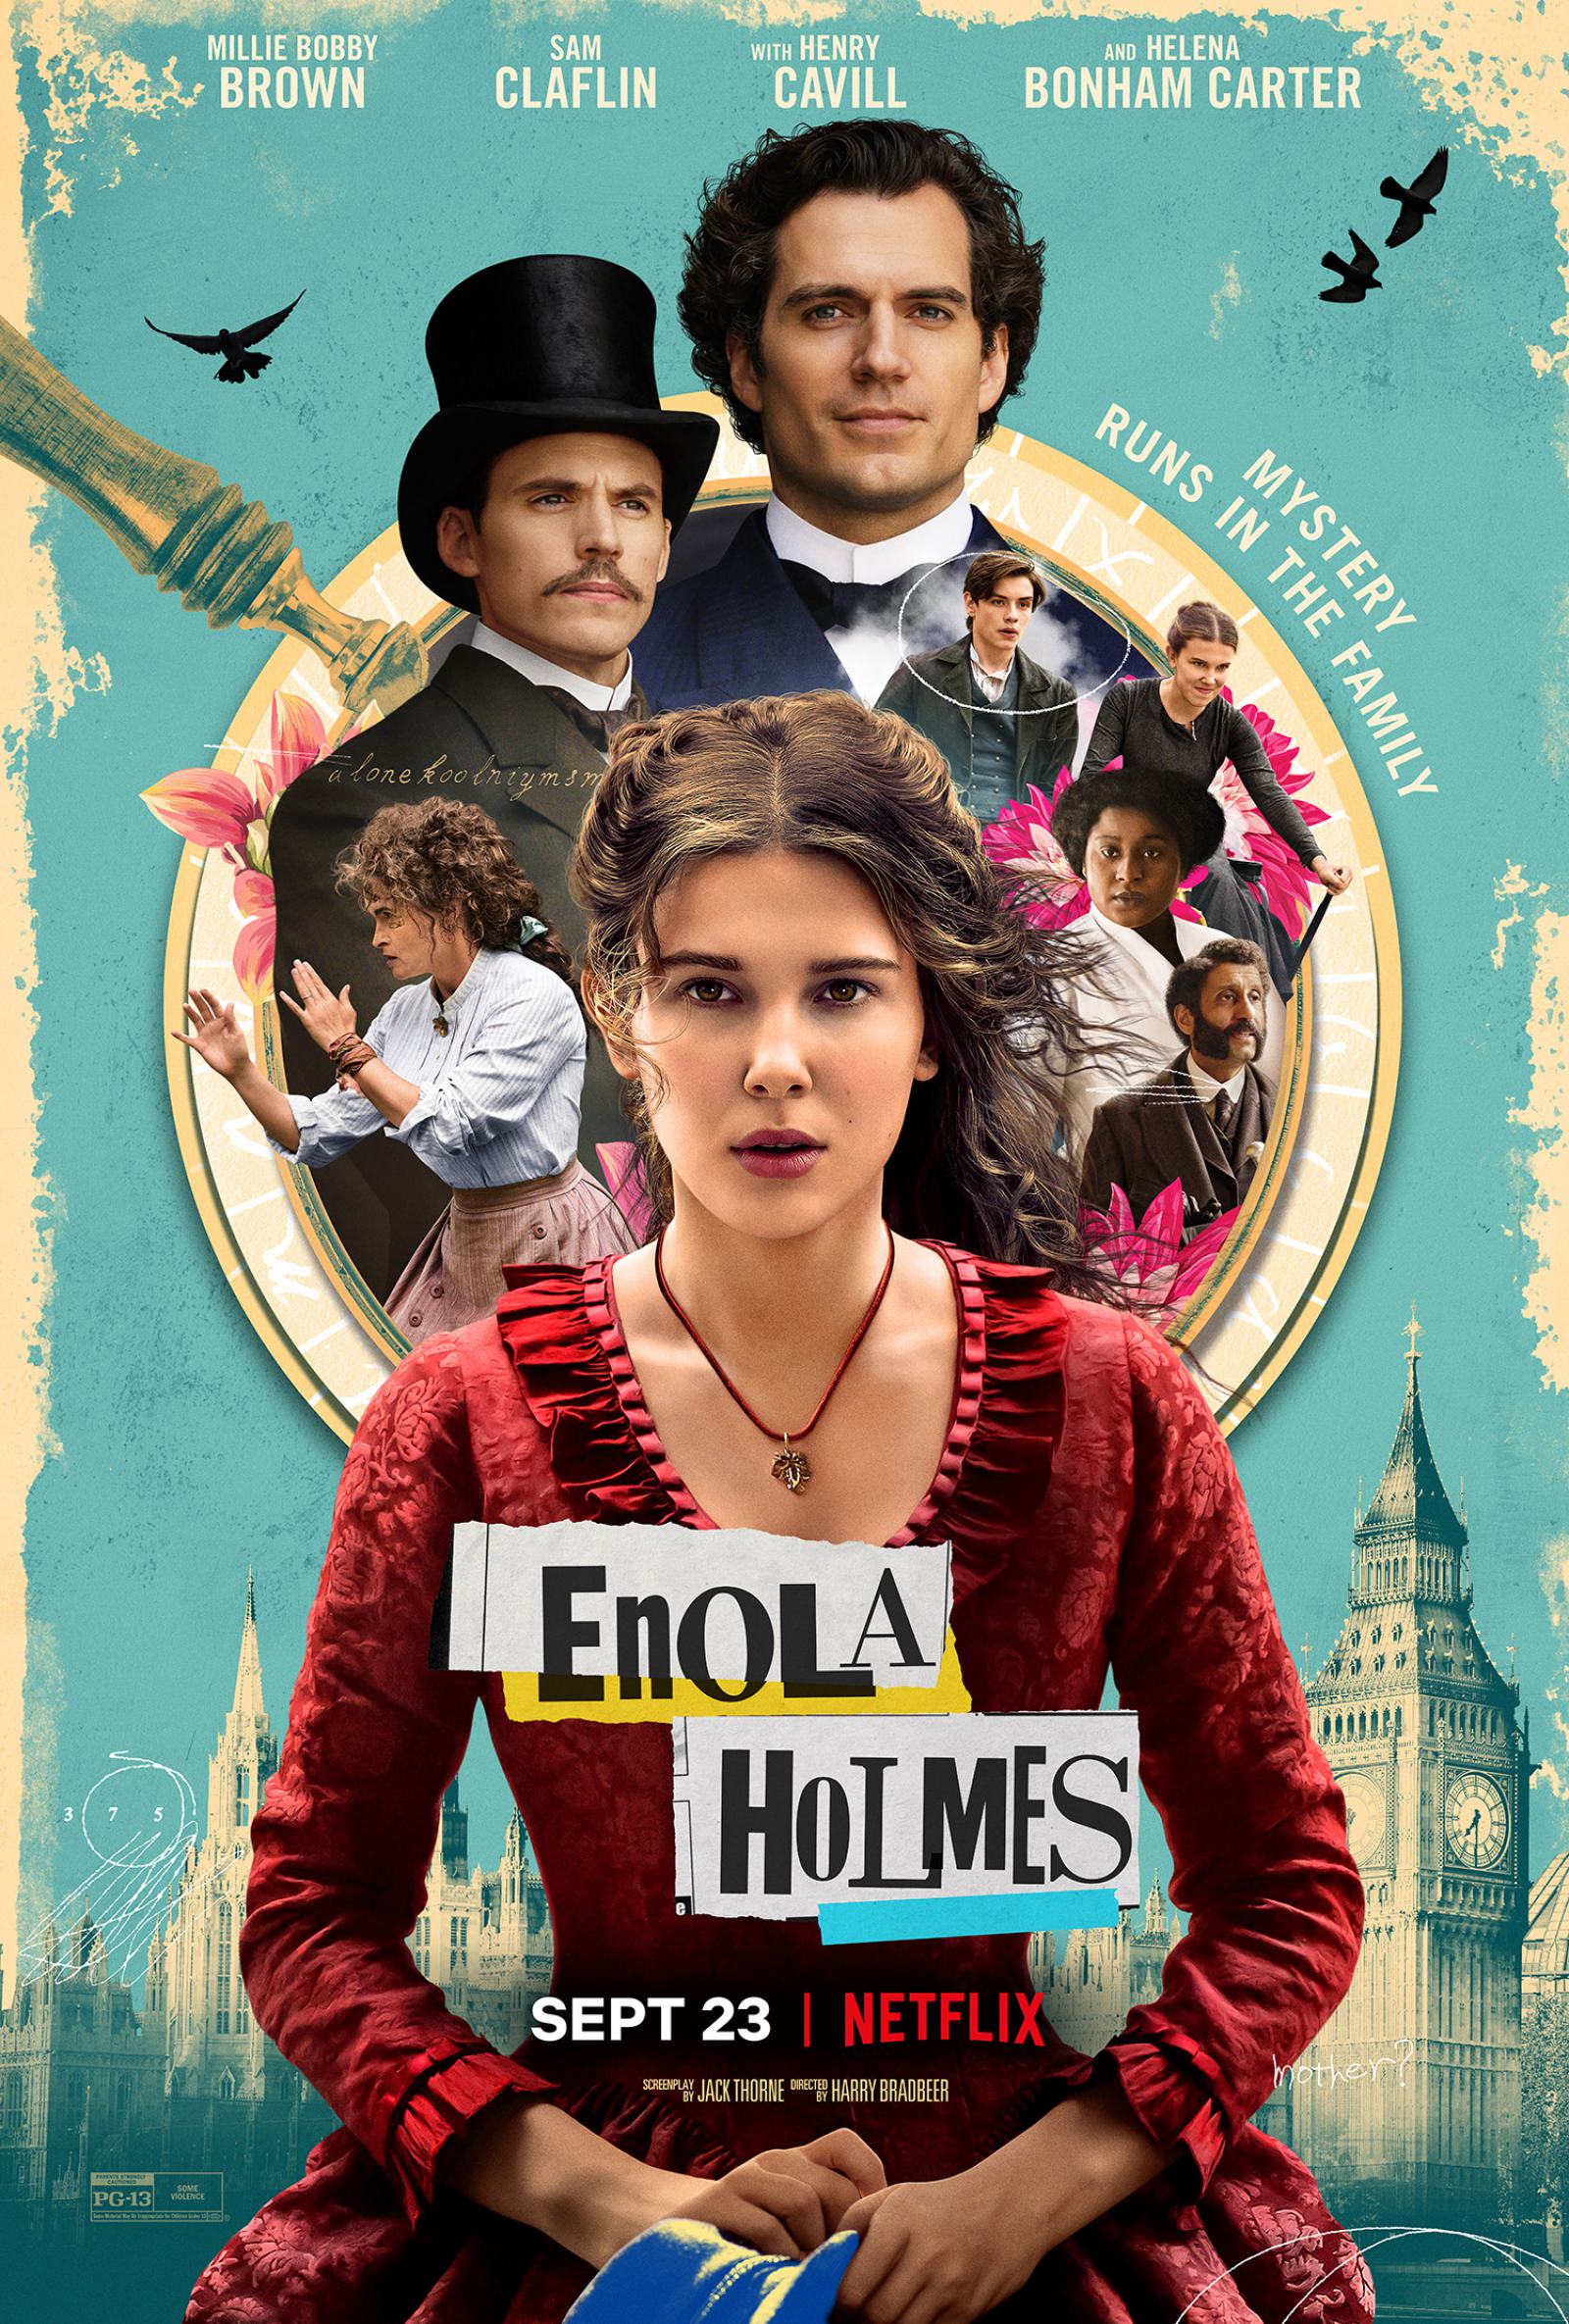 Enola Holmes (2020) Poster #1 - Trailer Addict